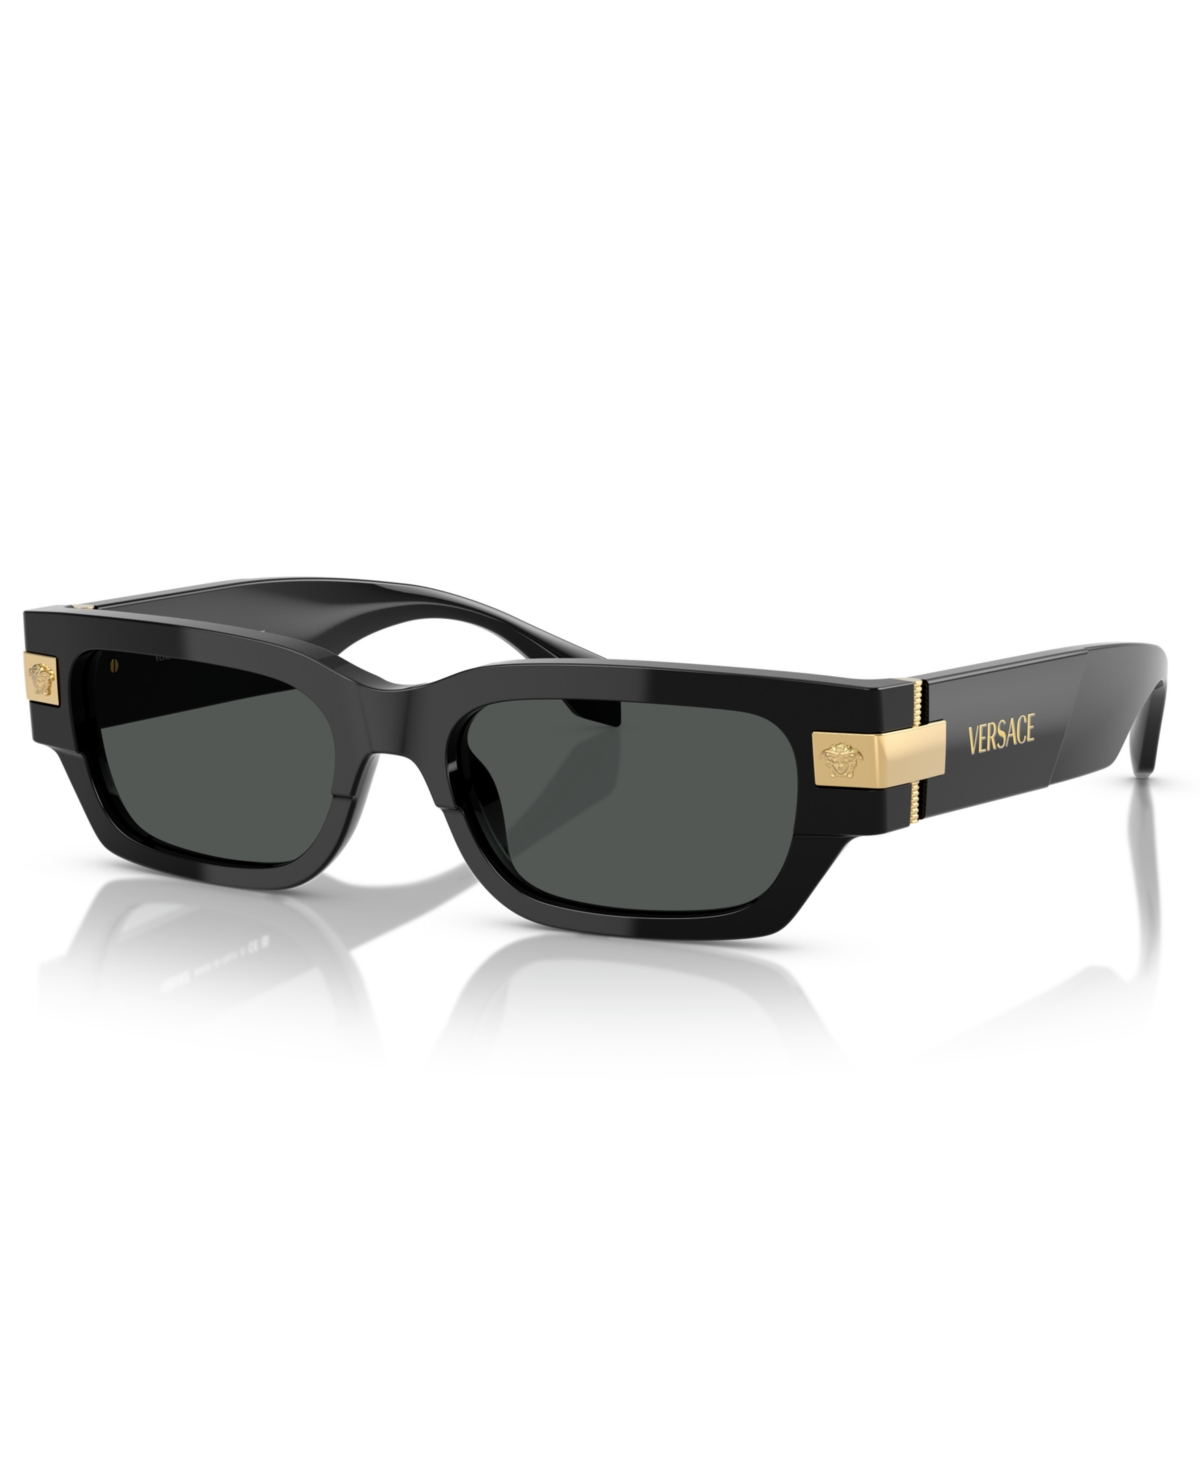 Men's Sunglasses, Ve4465 - Top Black, White